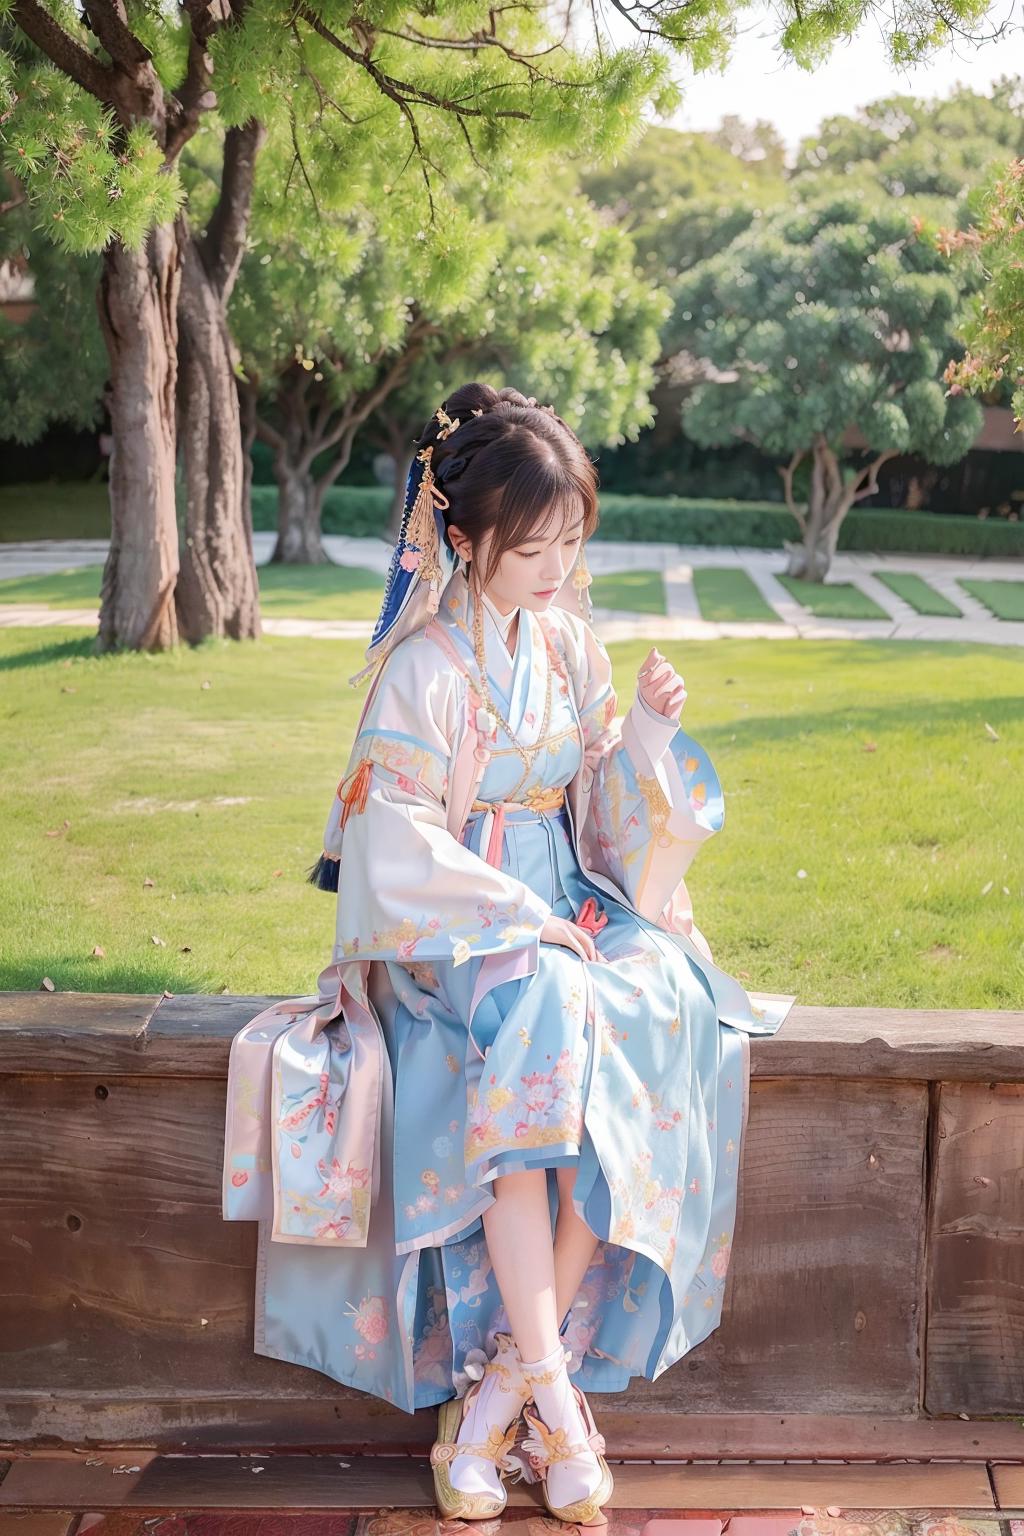 "A woman wearing a blue kimono sitting on a wooden bench."